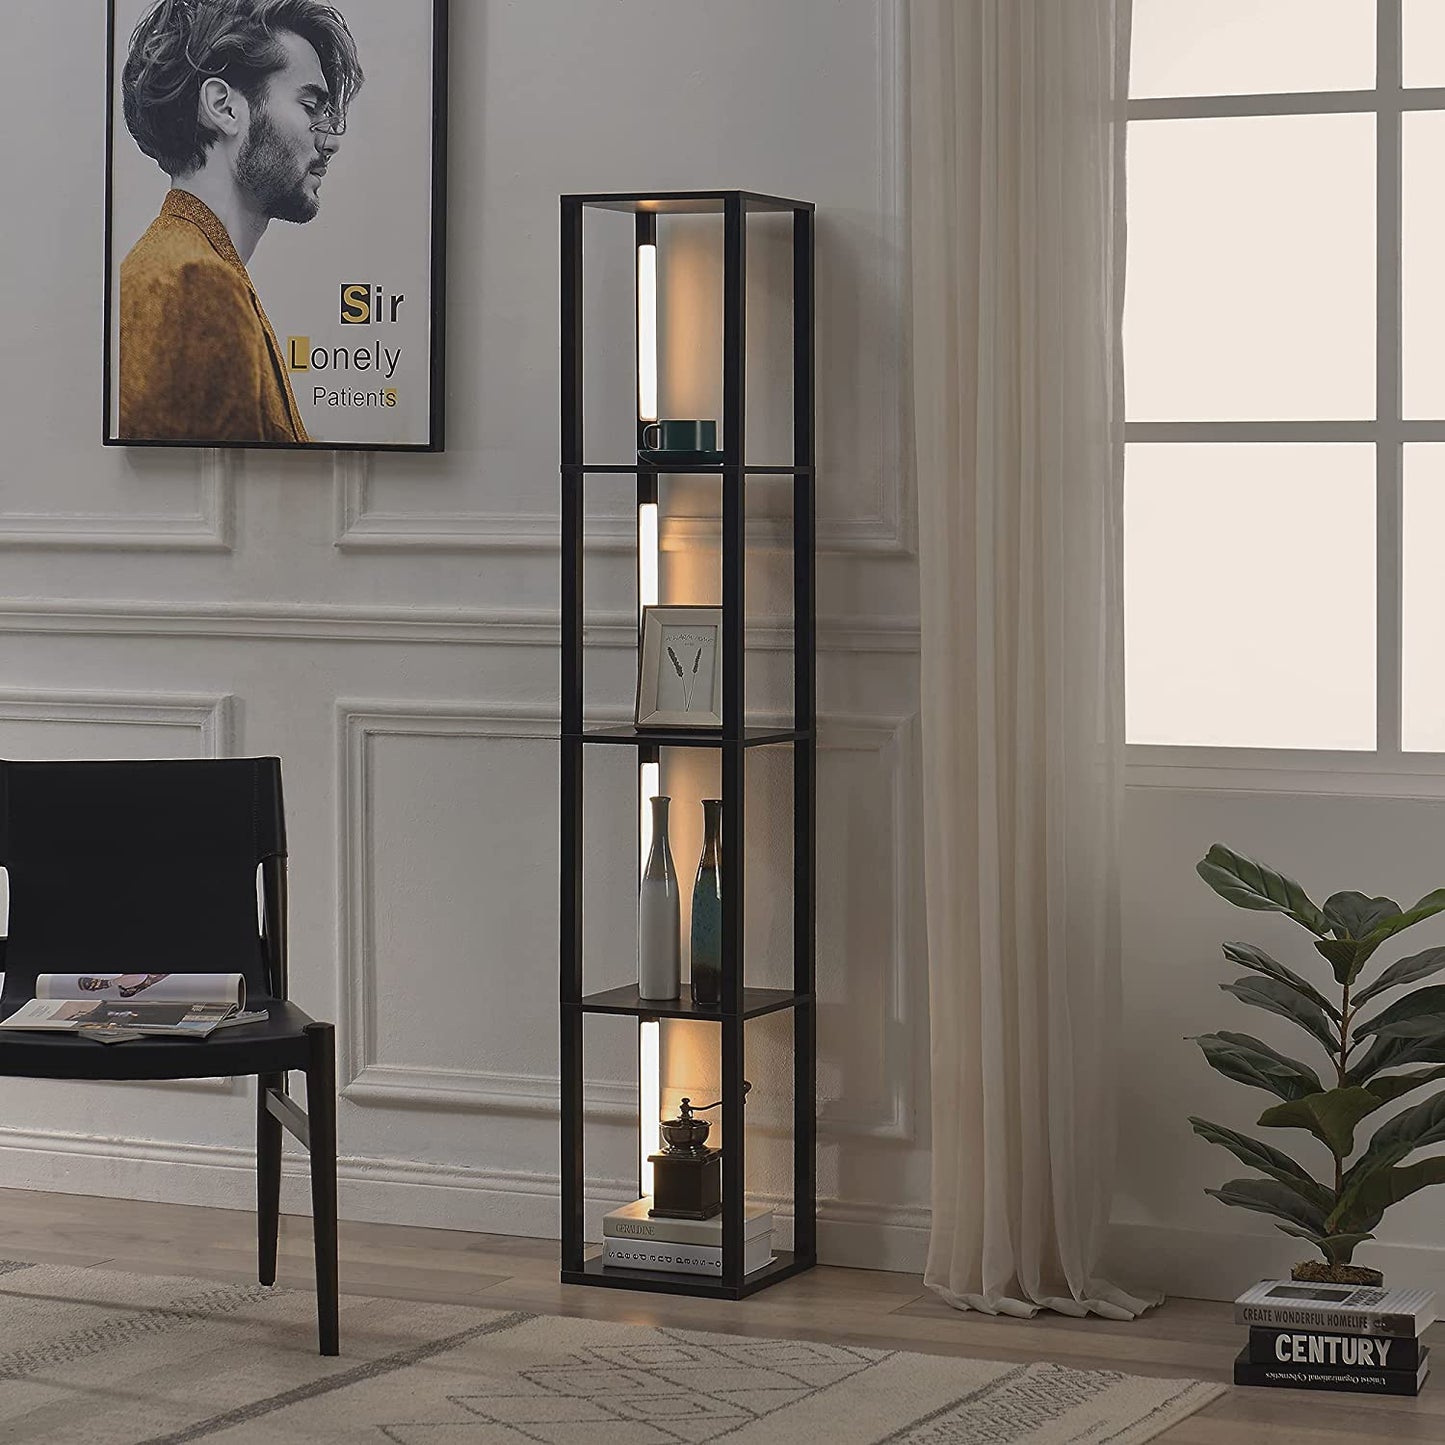 FENLO Fancy Display Shelves with LED Floor Lamp